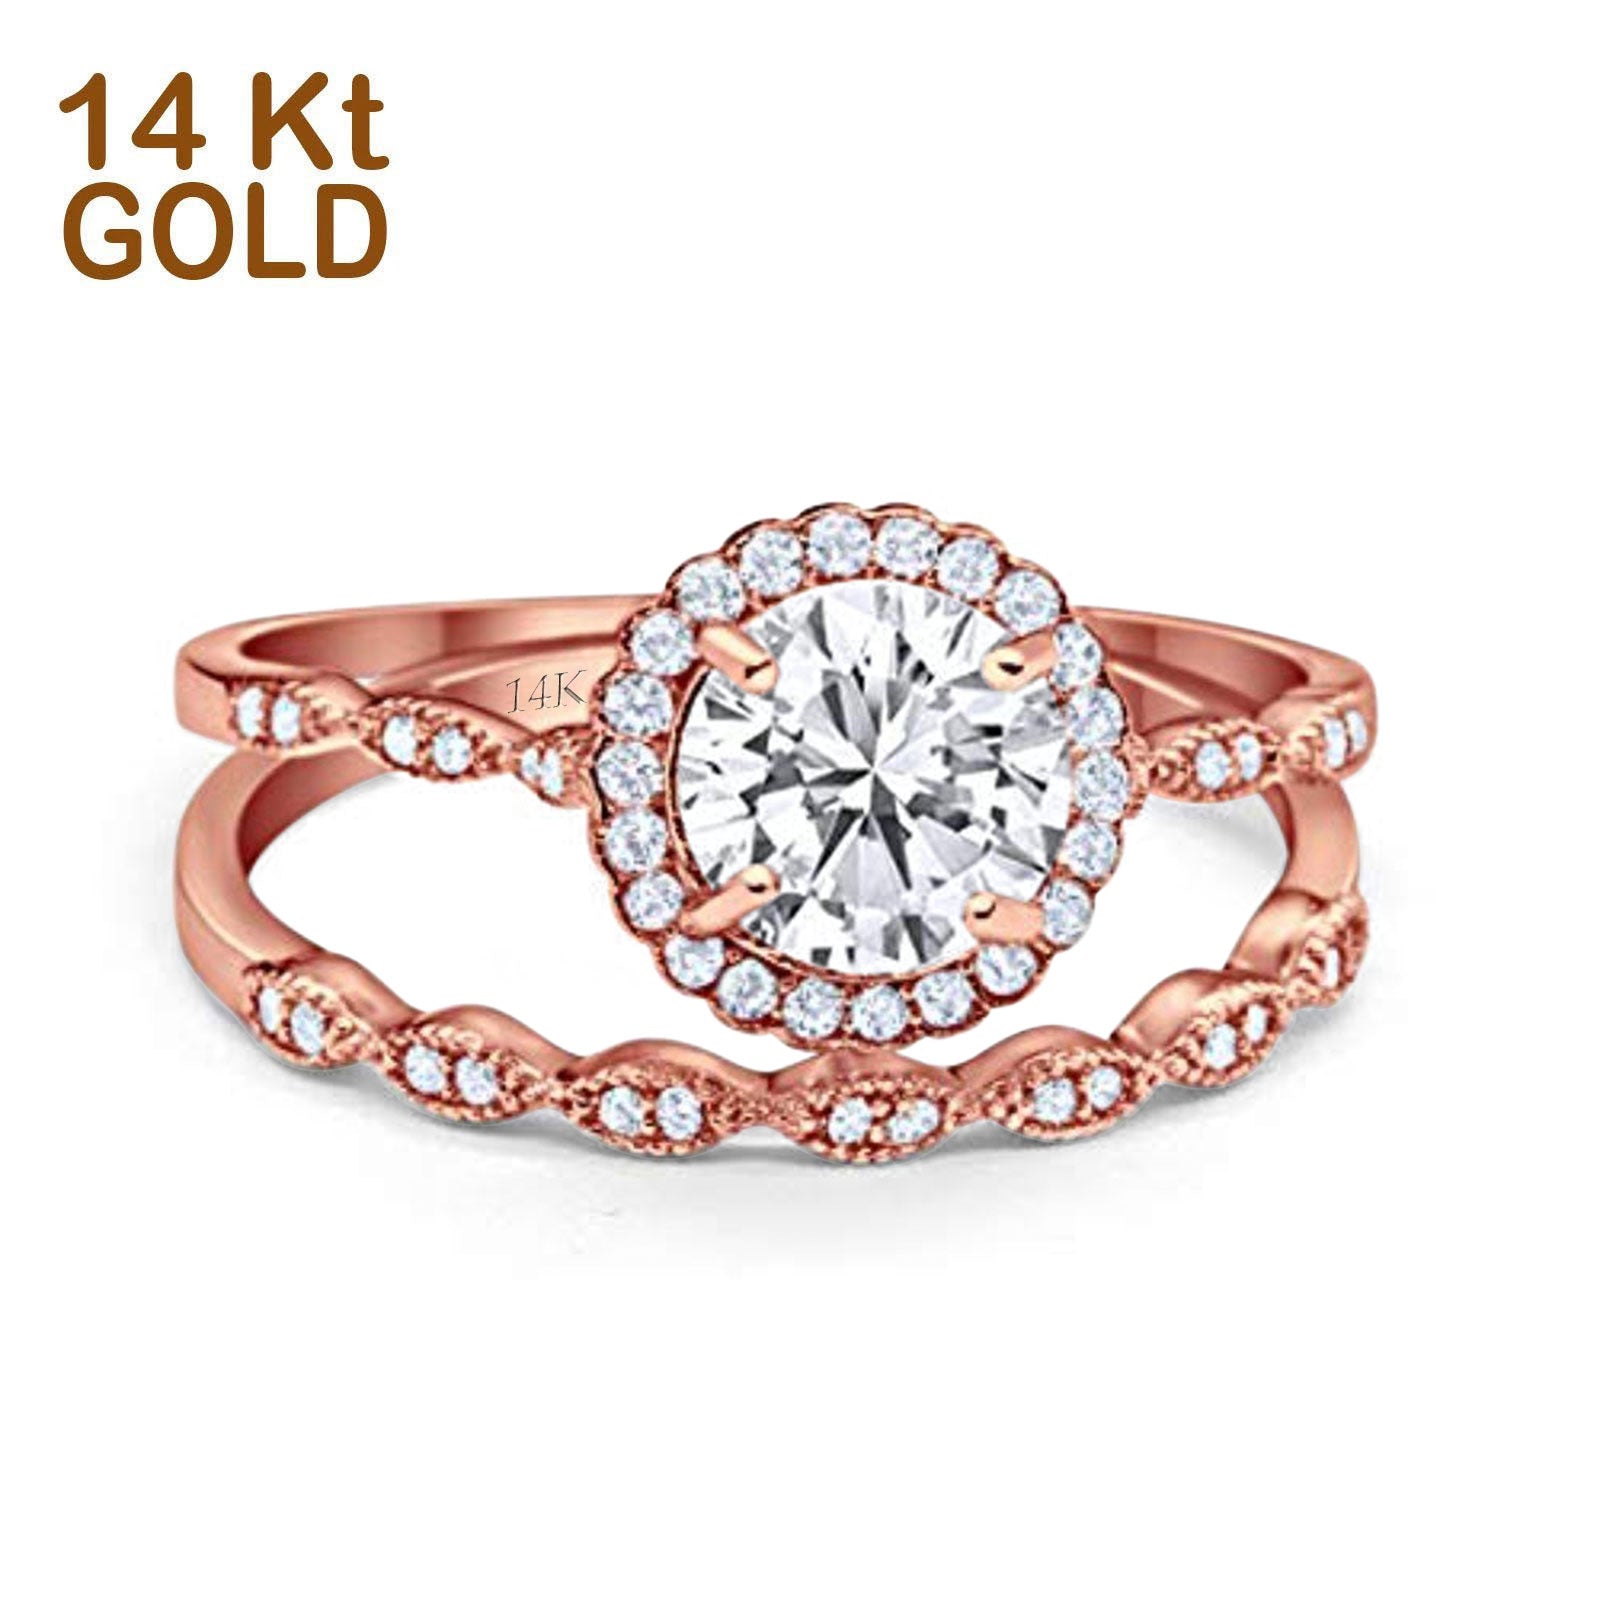 14K Gold Two Piece Round Shape Wedding Ring Bridal Set Band Engagement Simulated CZ